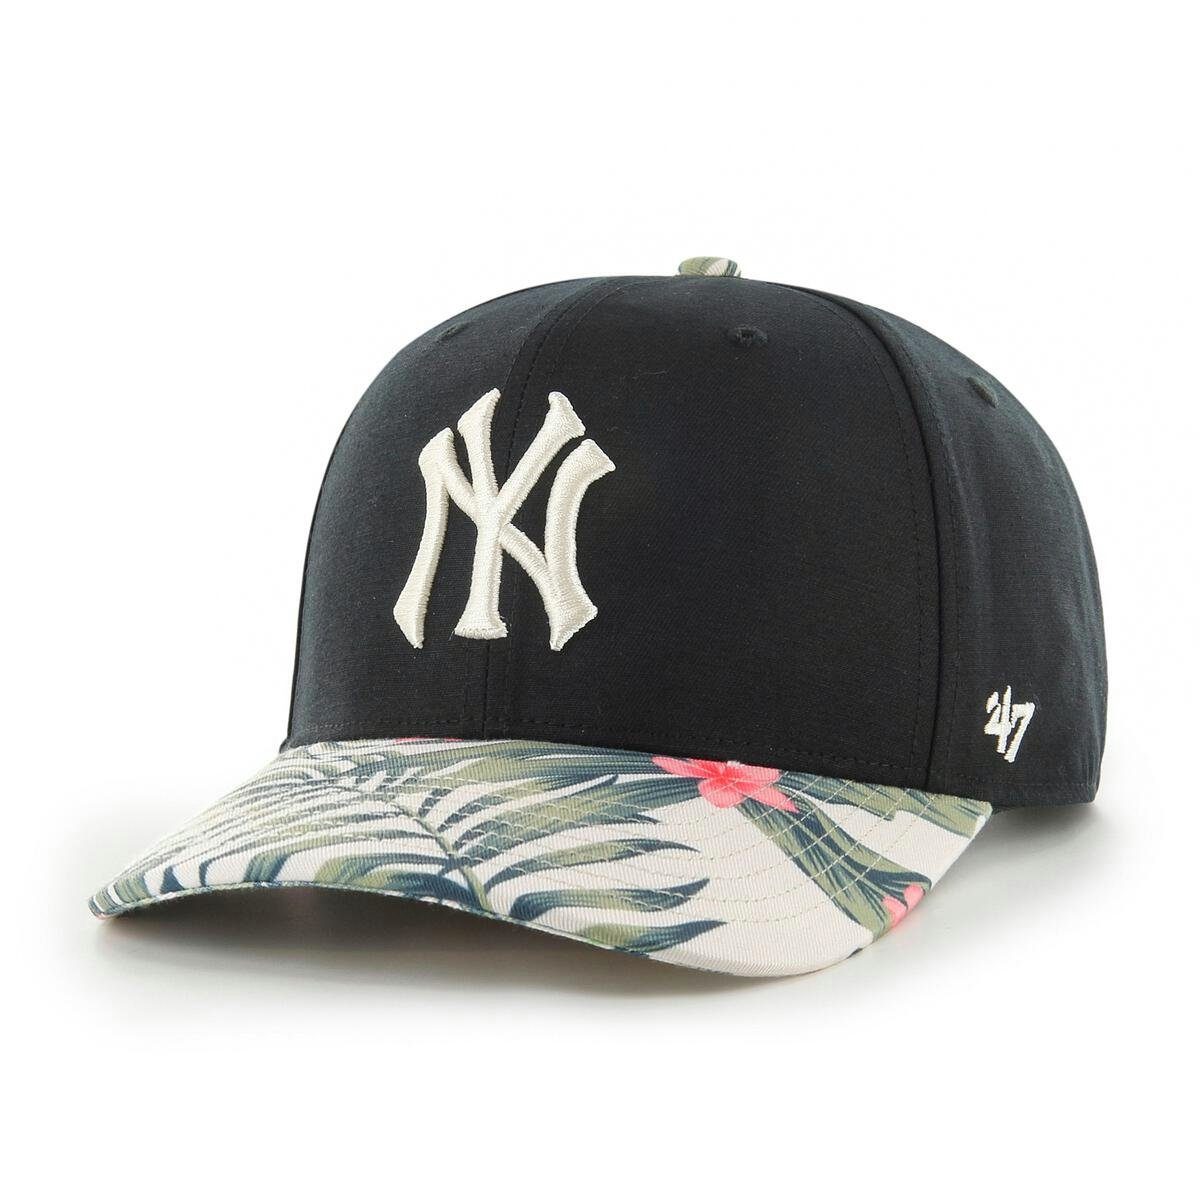 '47 Snapback MLB MVP Yankees Floral Coastal Brand 47 (1-St) York Cap DP New Snap